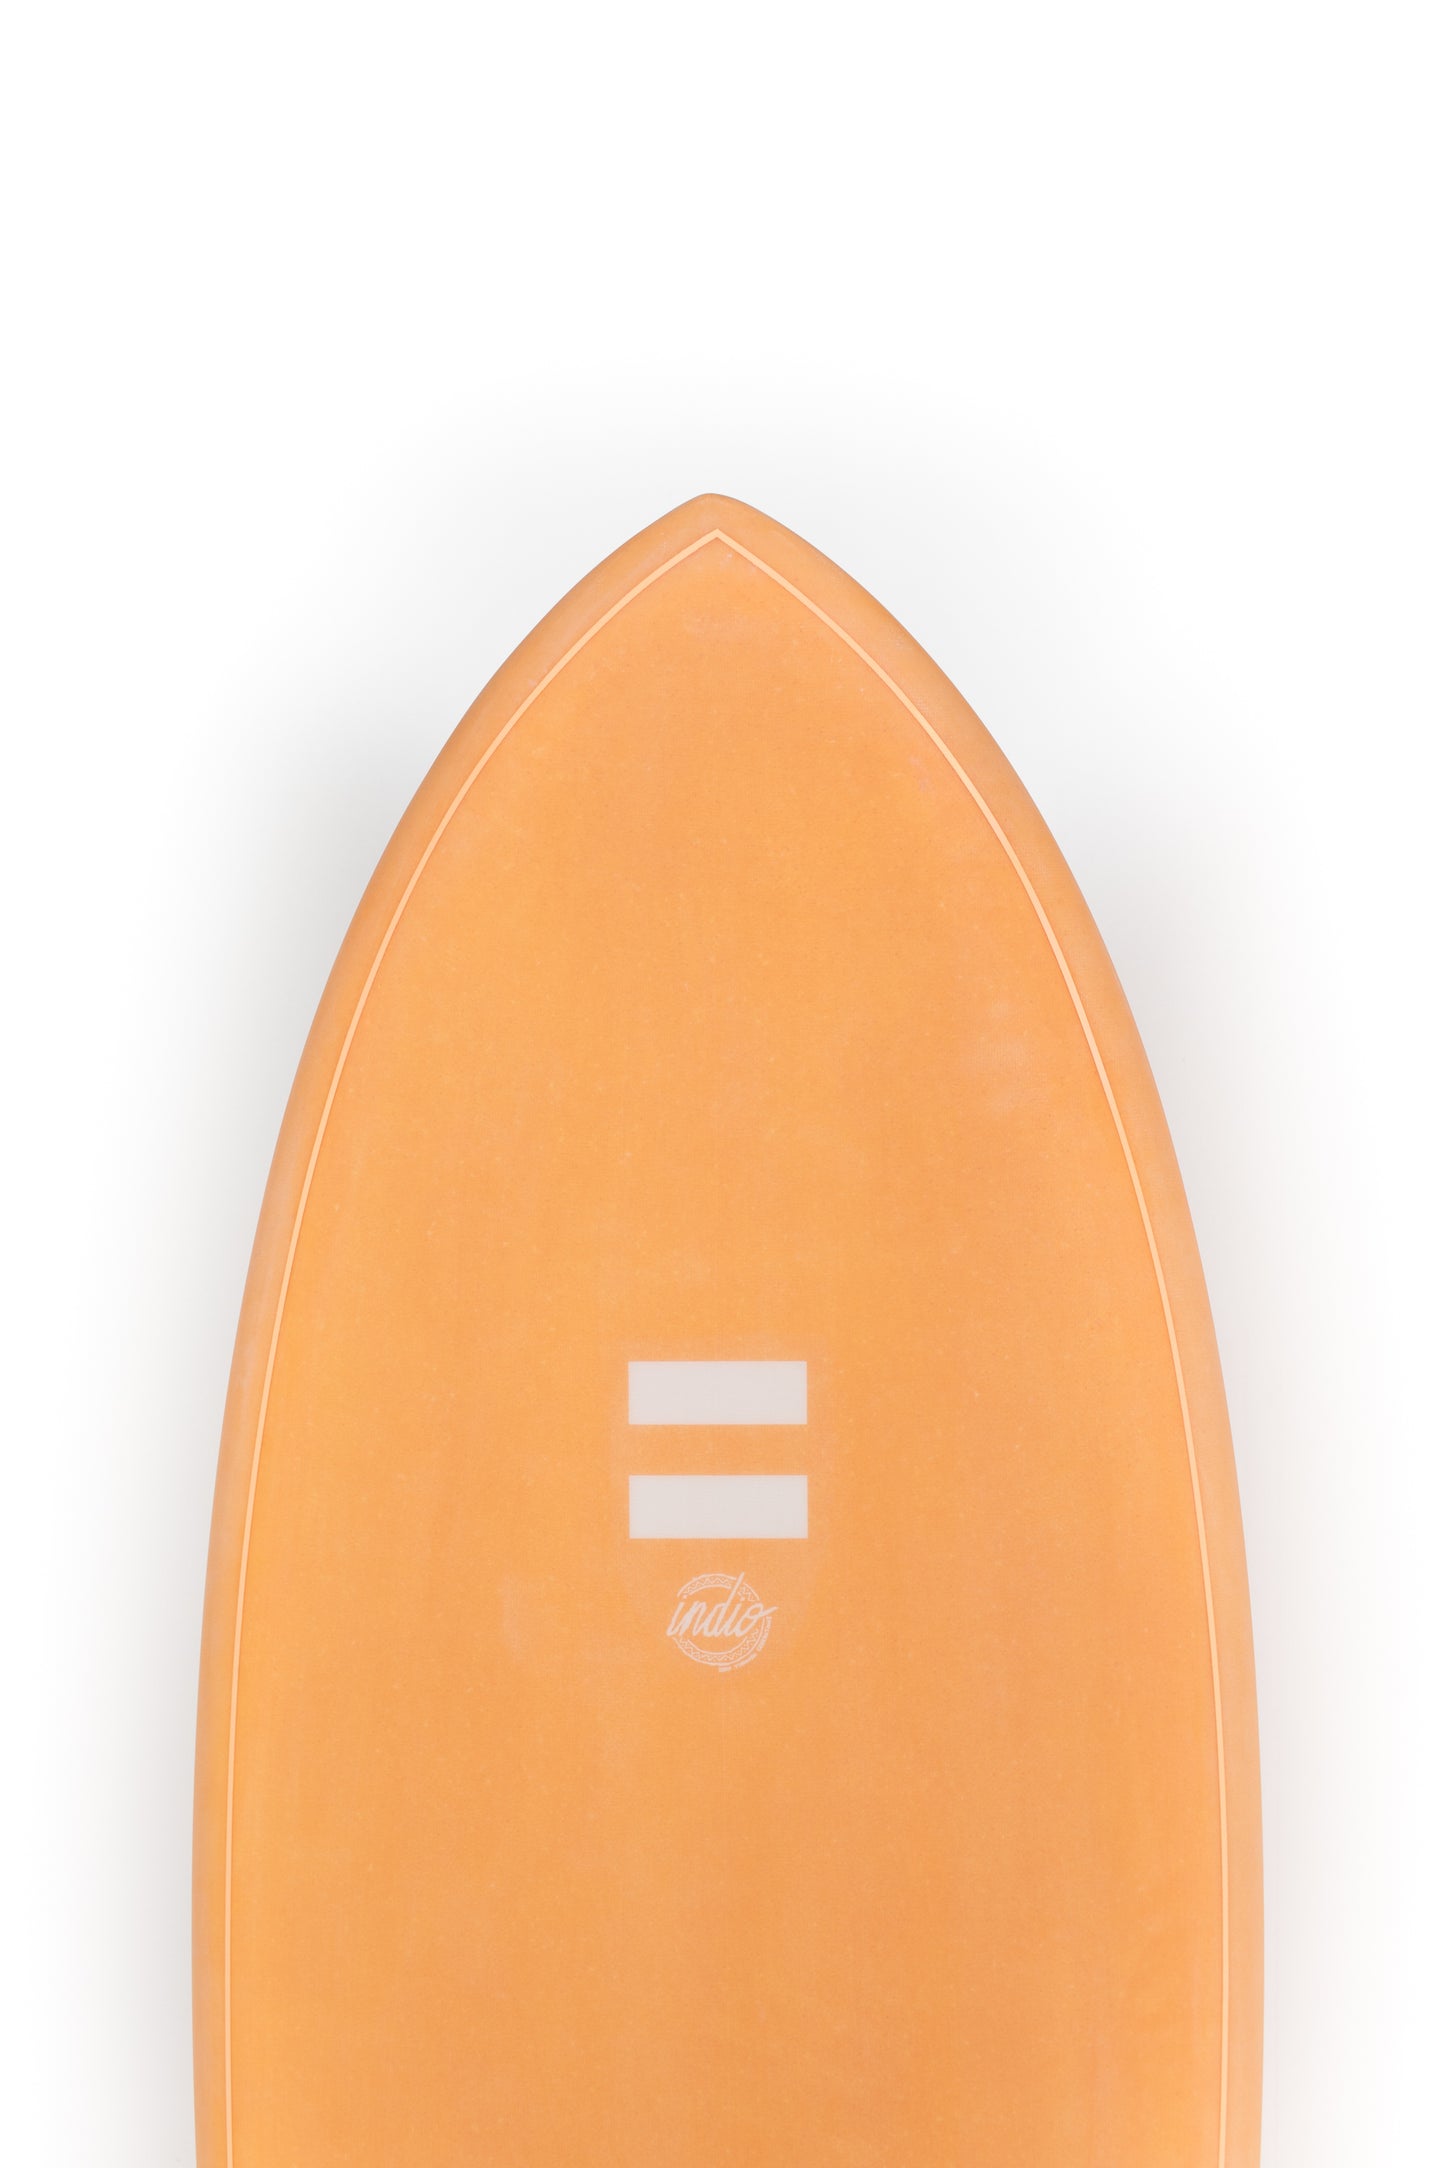 
                  
                    Pukas Surf Shop -  Indio Surfboards - DAB TERRACOTA FCS II - 5’3” x 20 3/4 x 2 3/8 x 30.92L.
                  
                